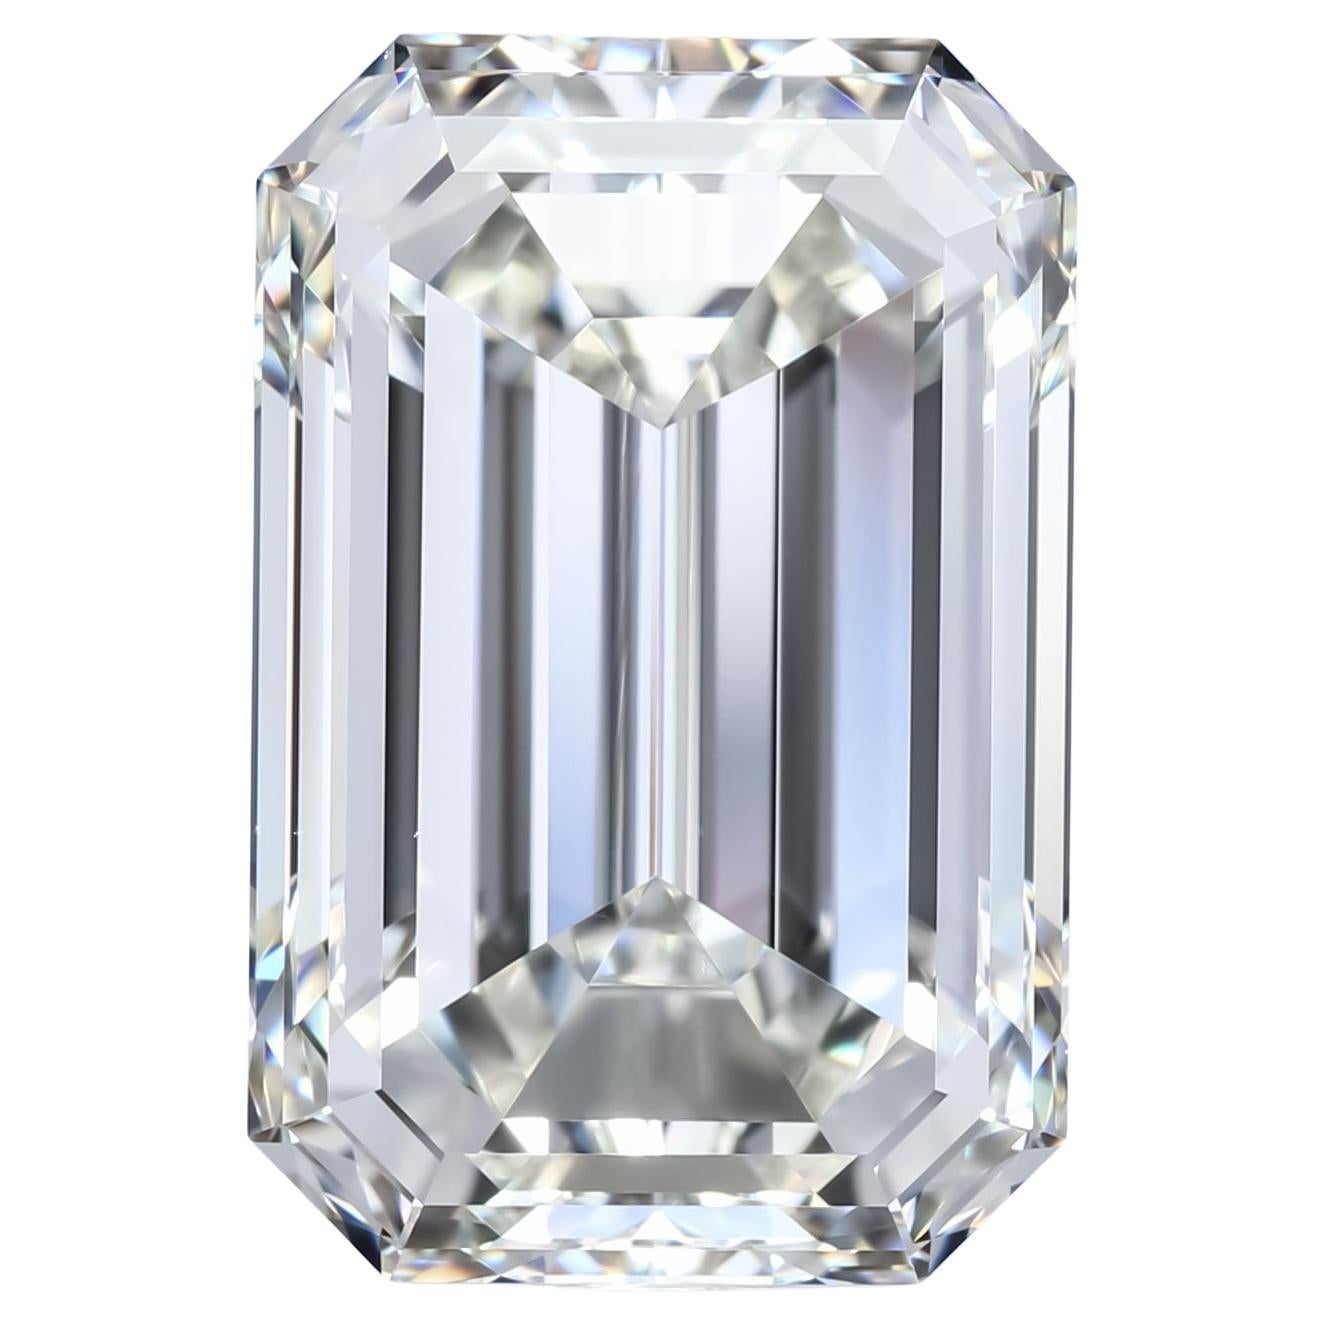 Alexander GIA Certified 9.15 Carat J VVS2 Emerald Cut Diamond For Sale